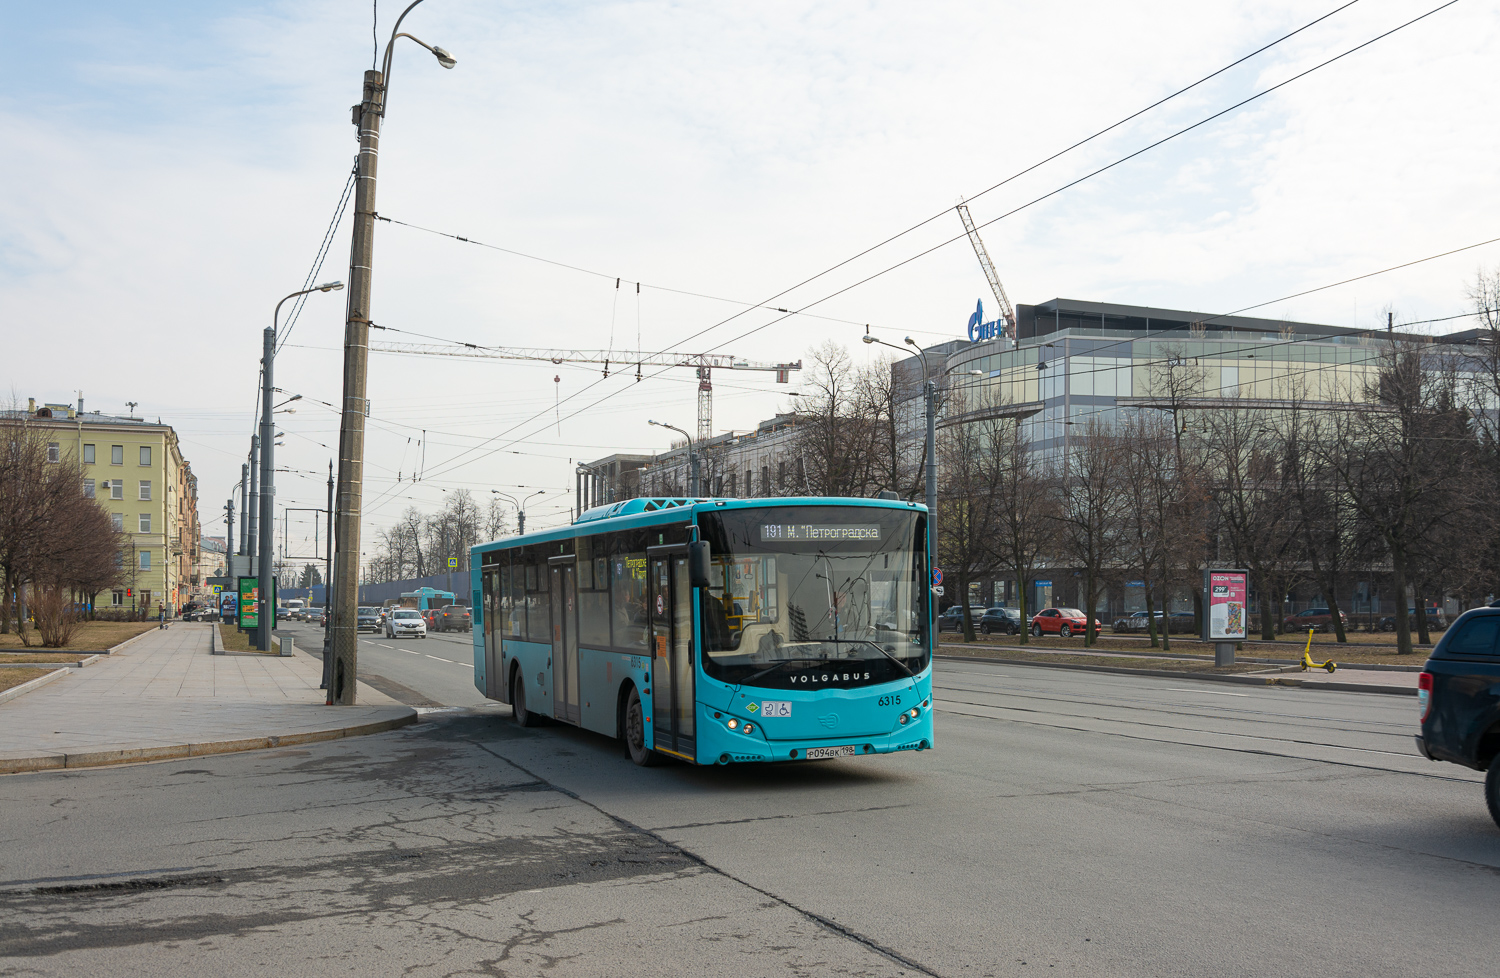 Sankt Petersburg, Volgabus-5270.G4 (LNG) Nr. 6315